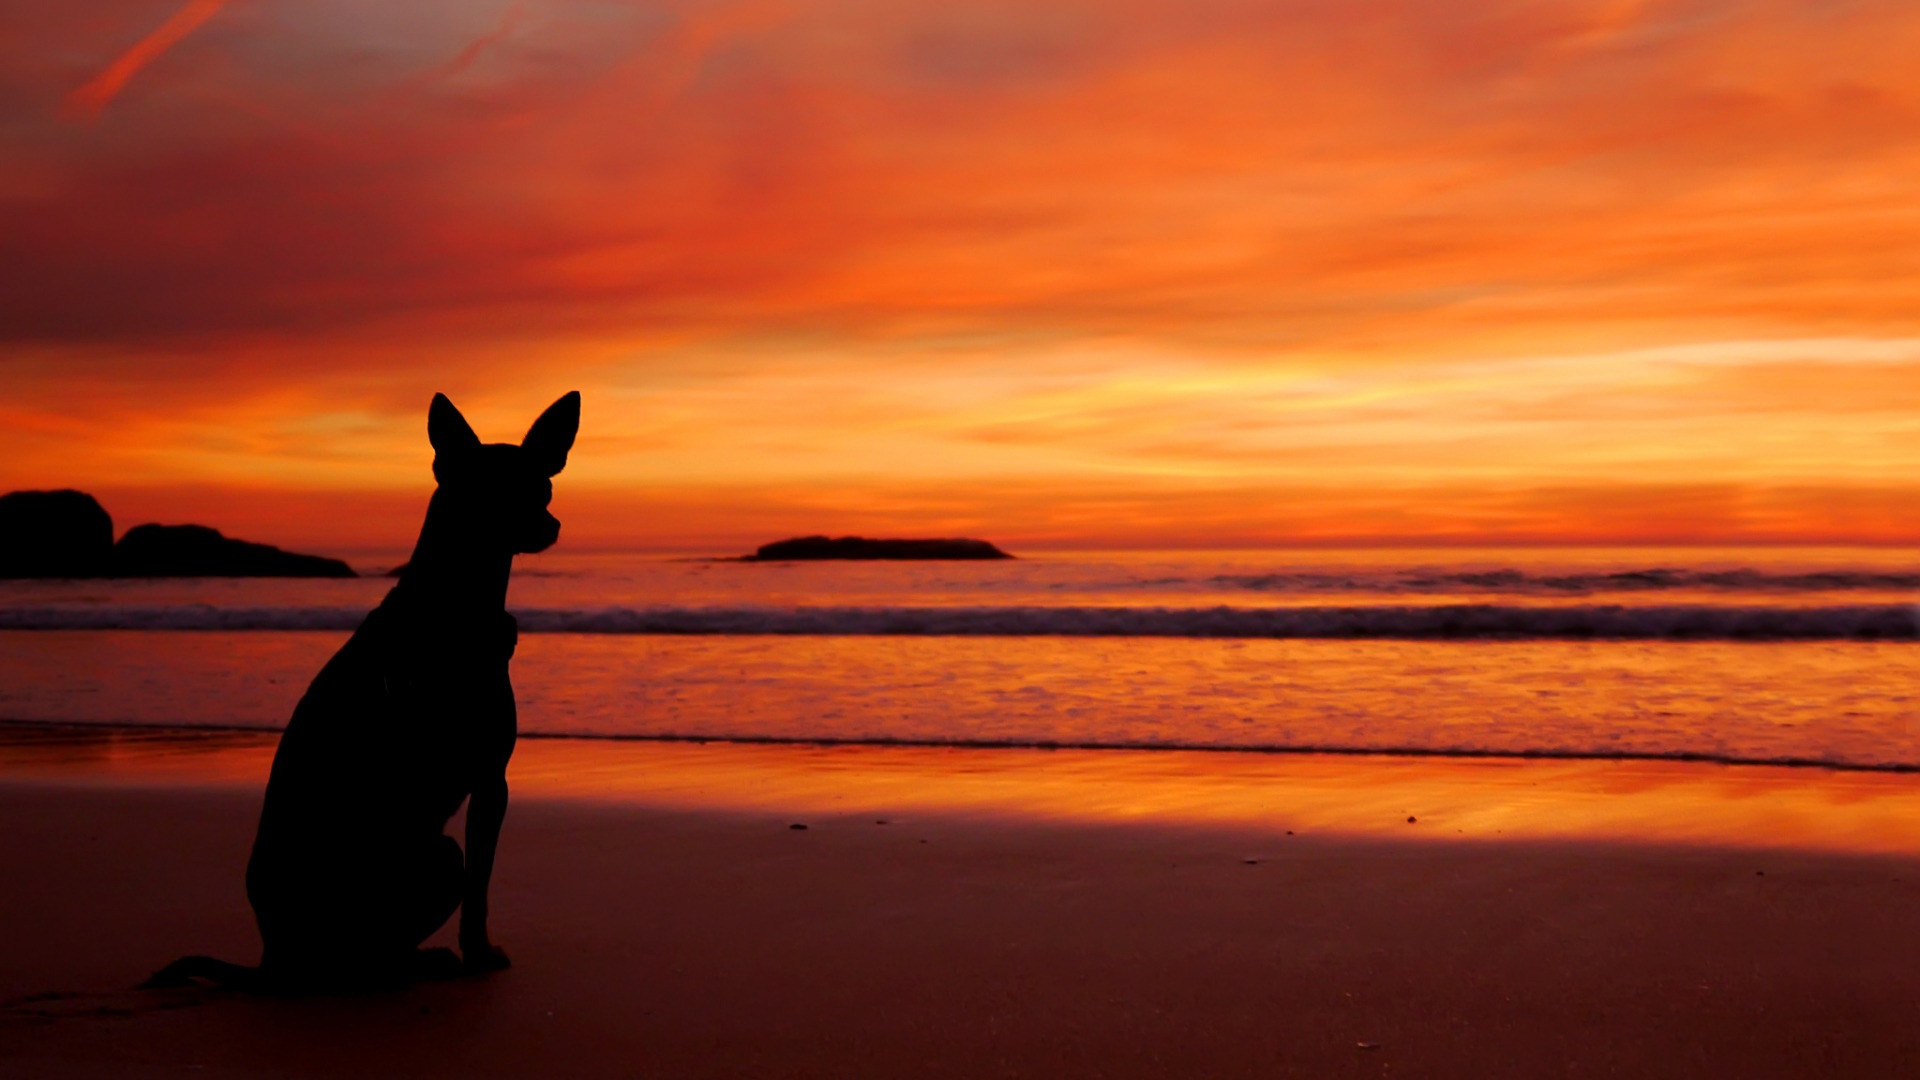 Dog On The Beach free wallpaper